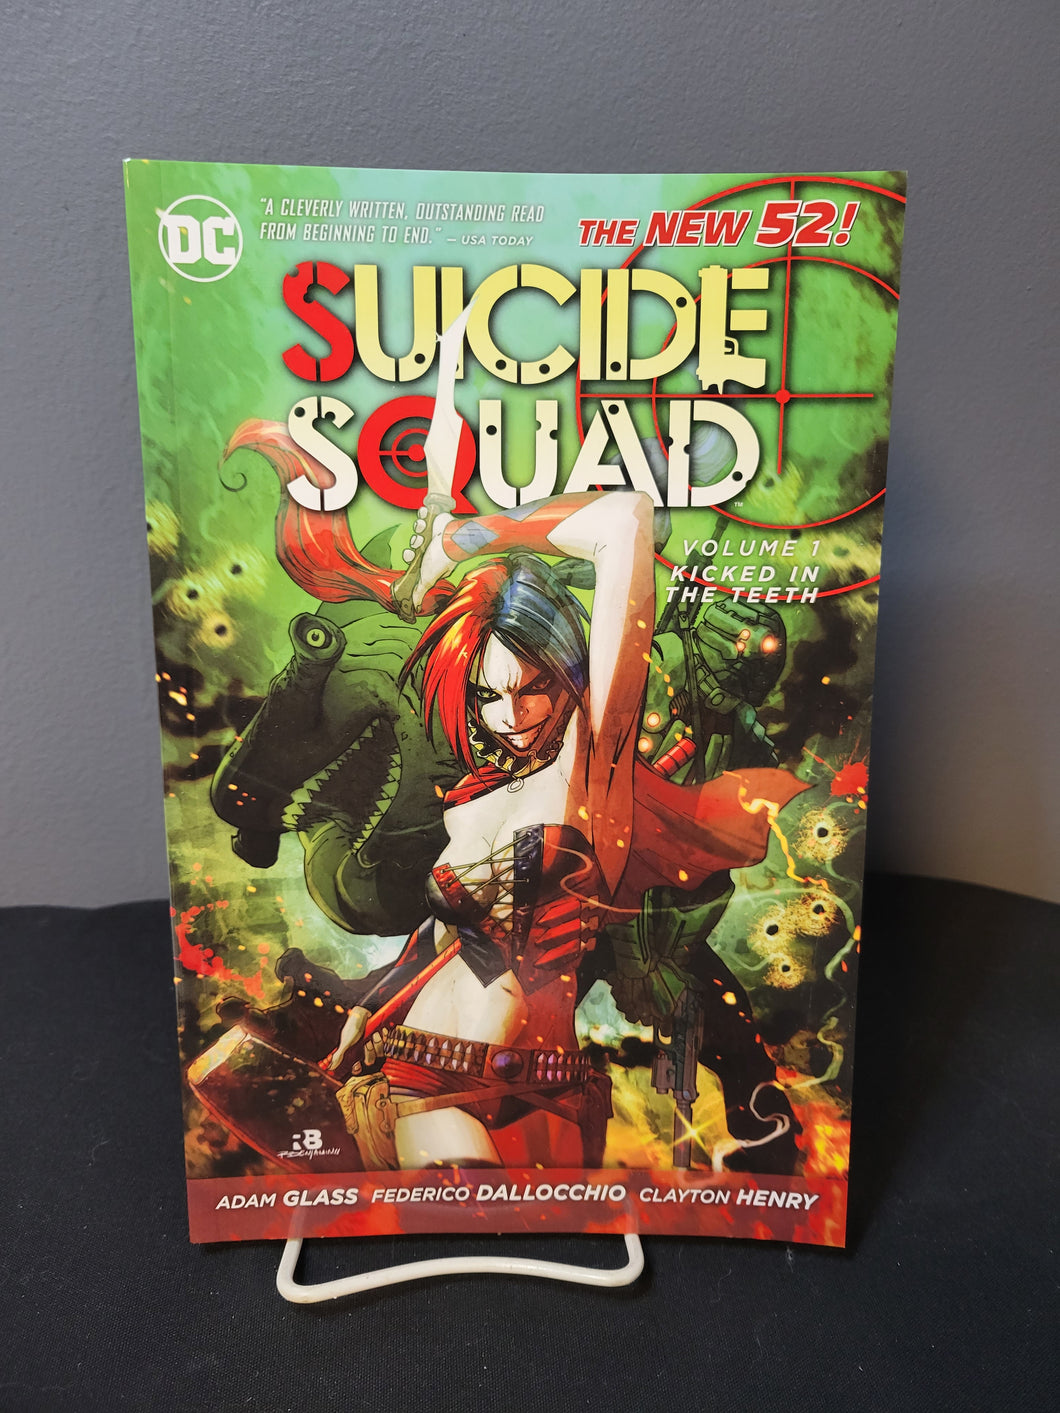 Suicide Squad Vol 1 TPB